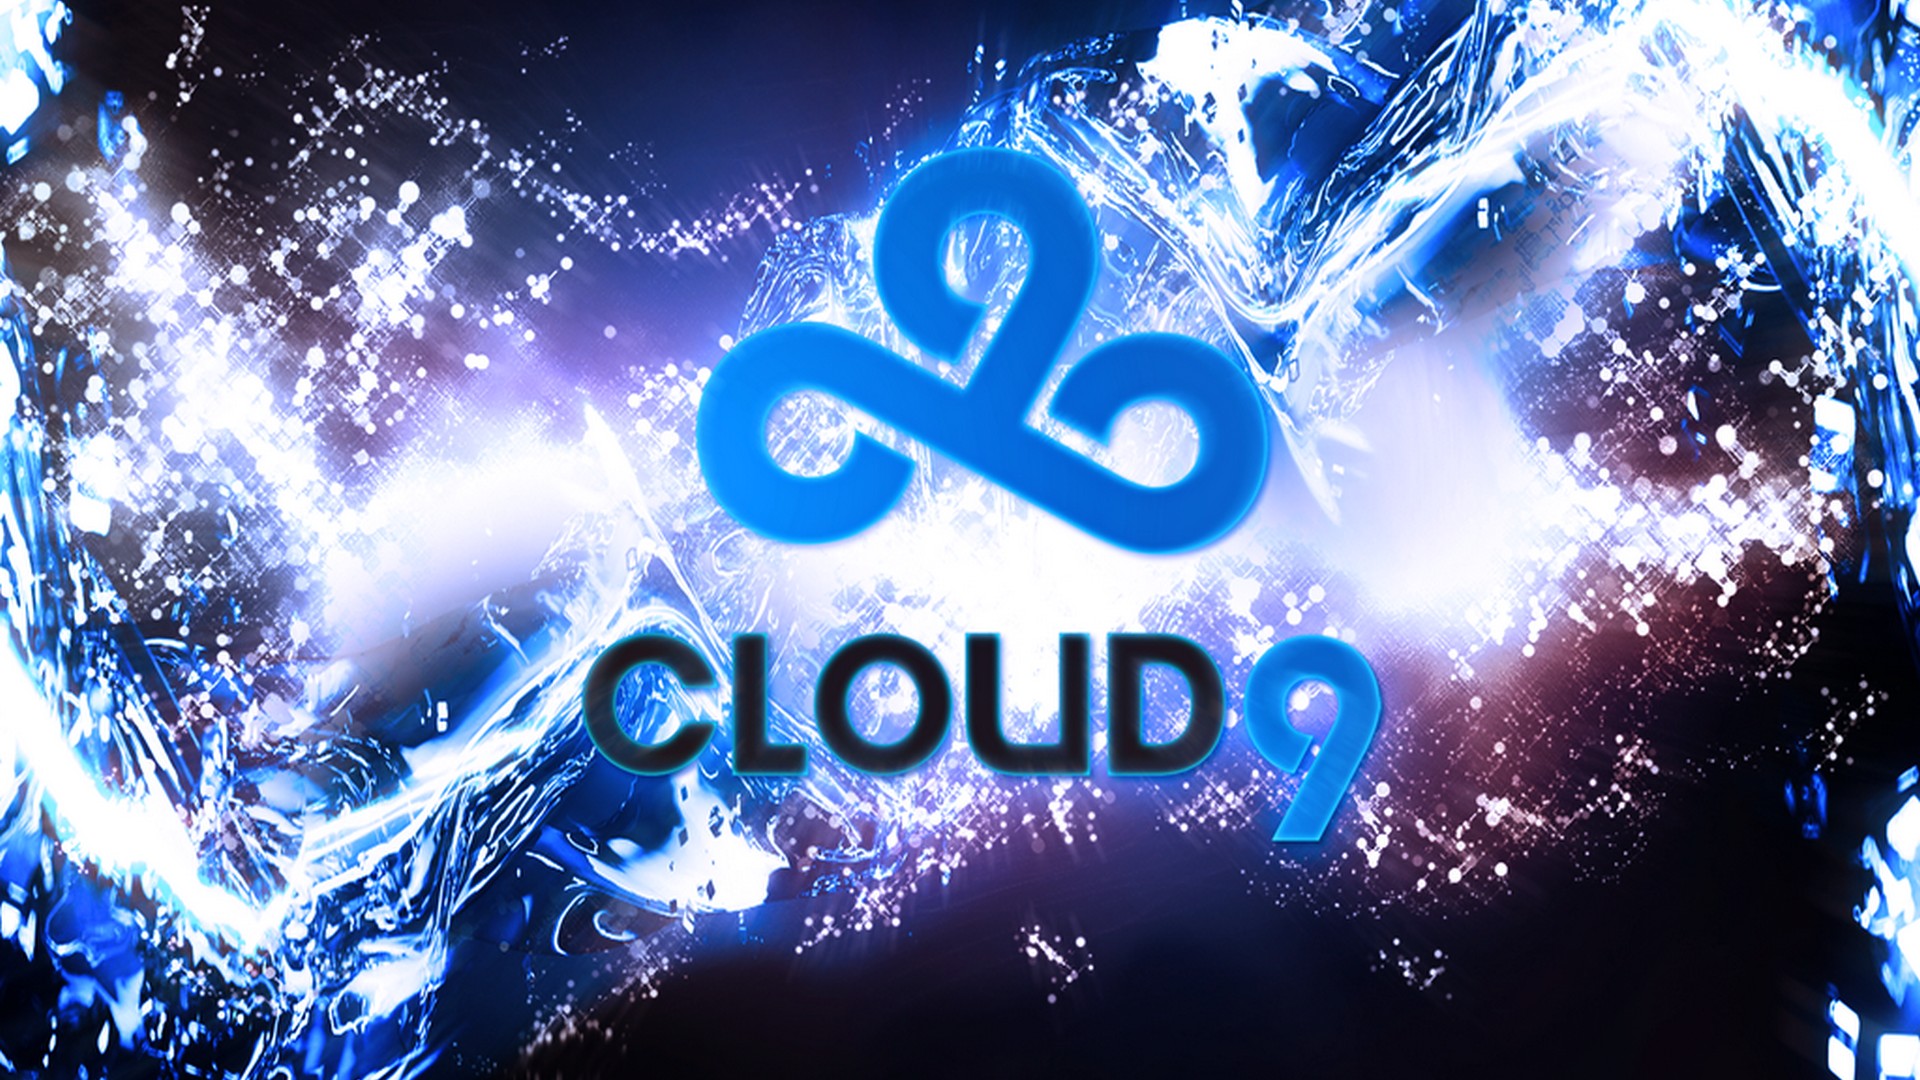 Hd Cloud 9 Backgrounds - Graphic Design - HD Wallpaper 